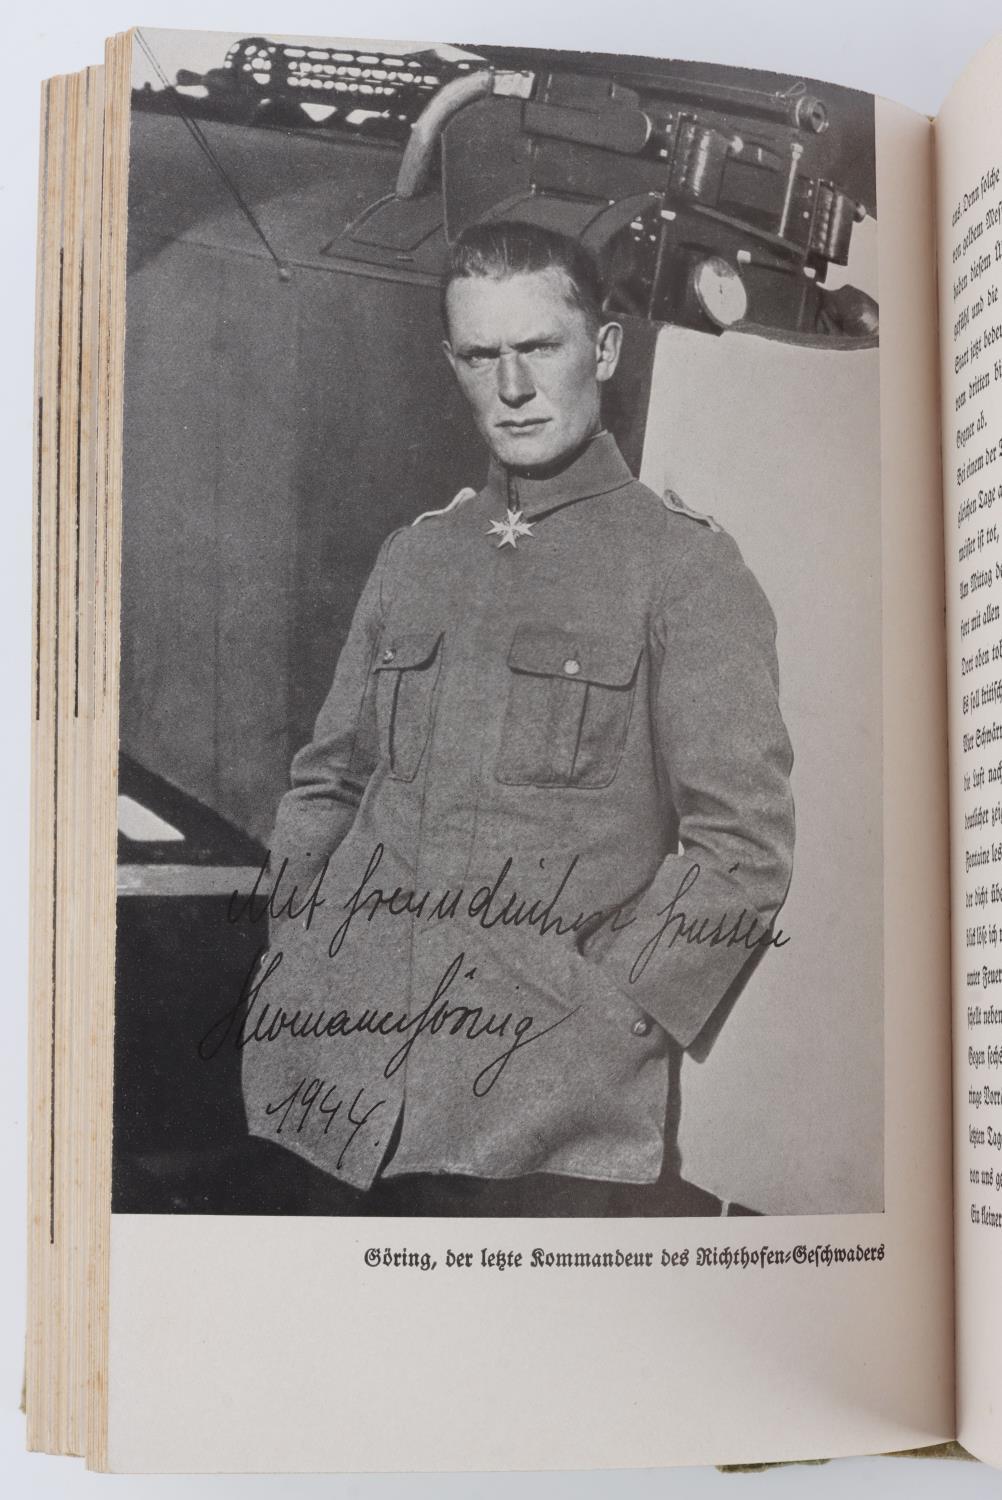 WWII GERMAN UDET RICKENBACKER GOERING SIGNED BOOK